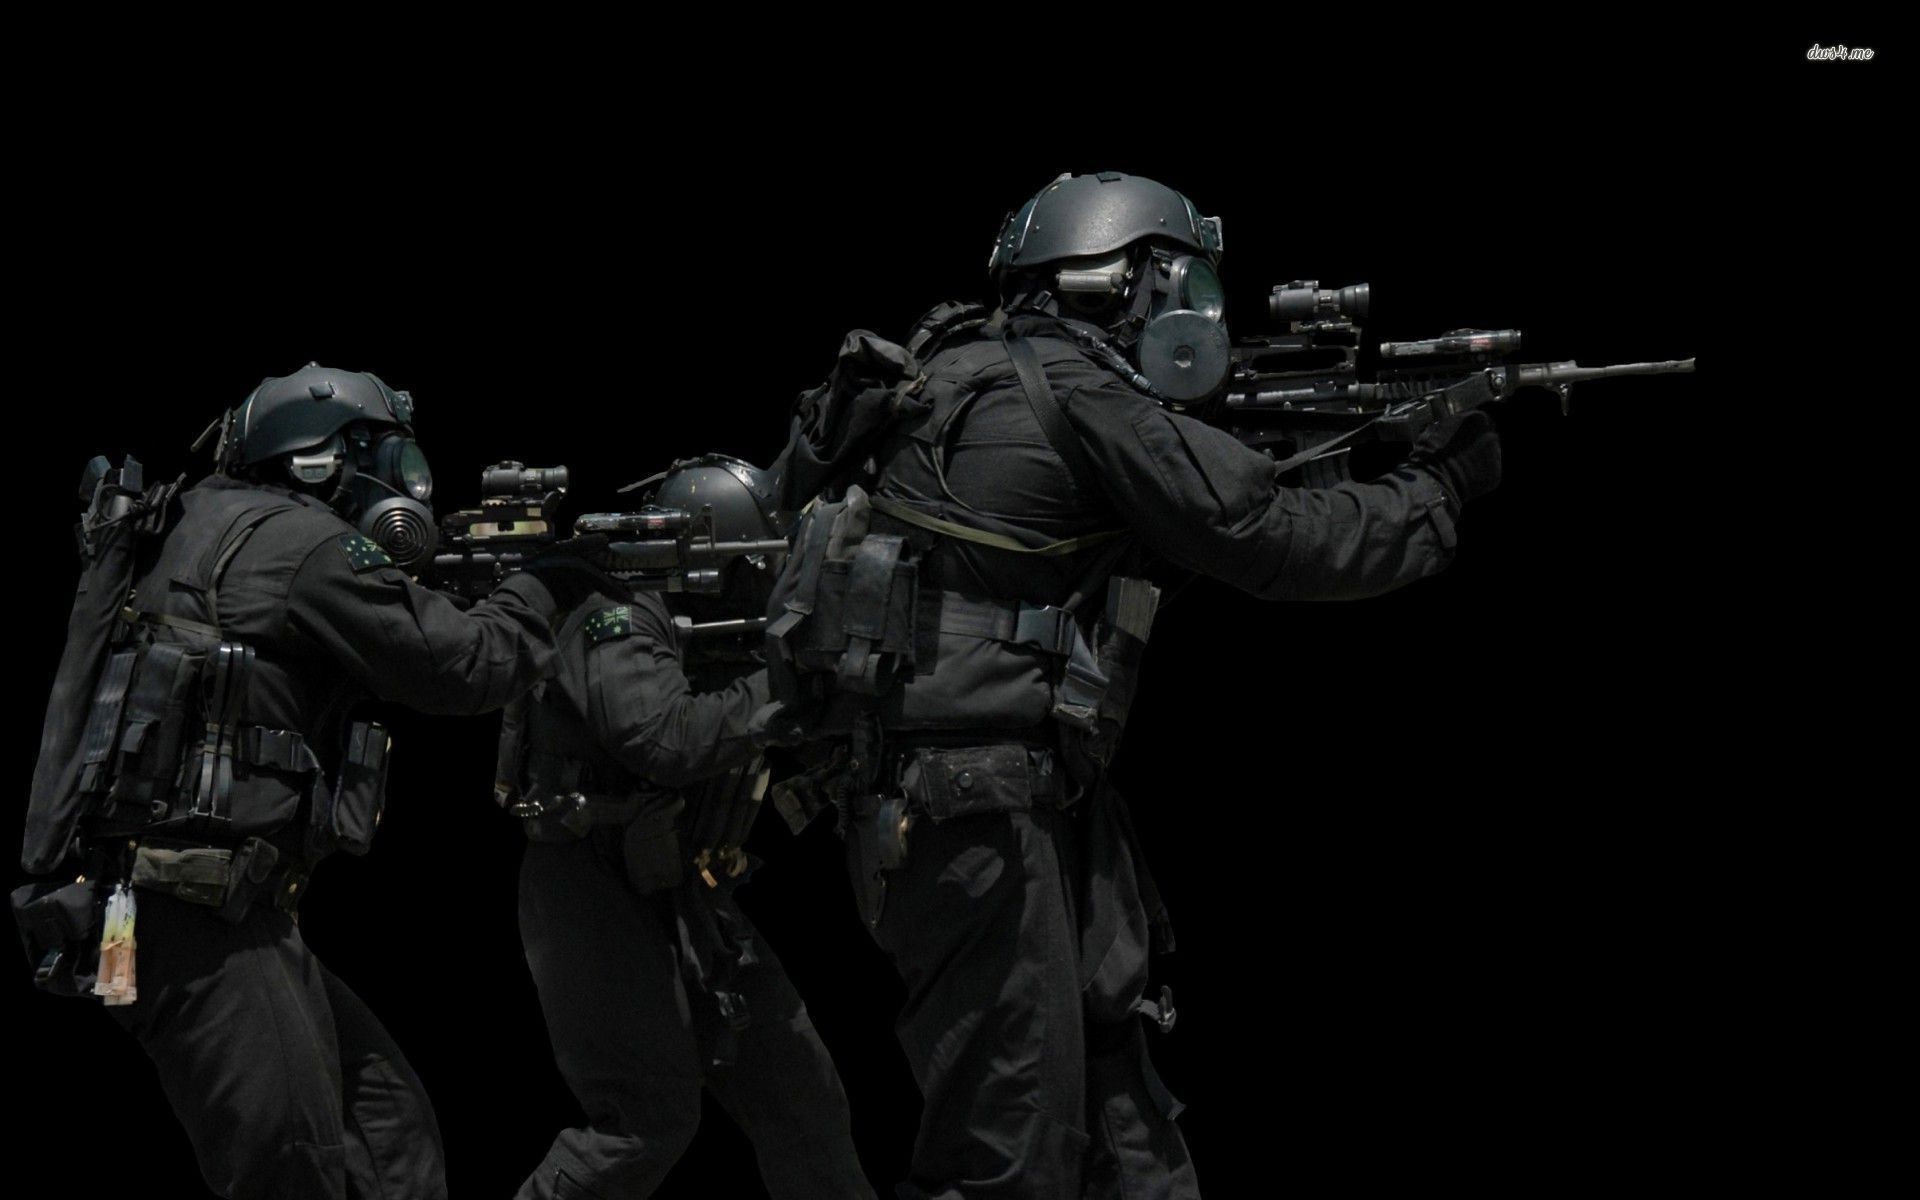 swat background. Swat, Tactical vest, Military design